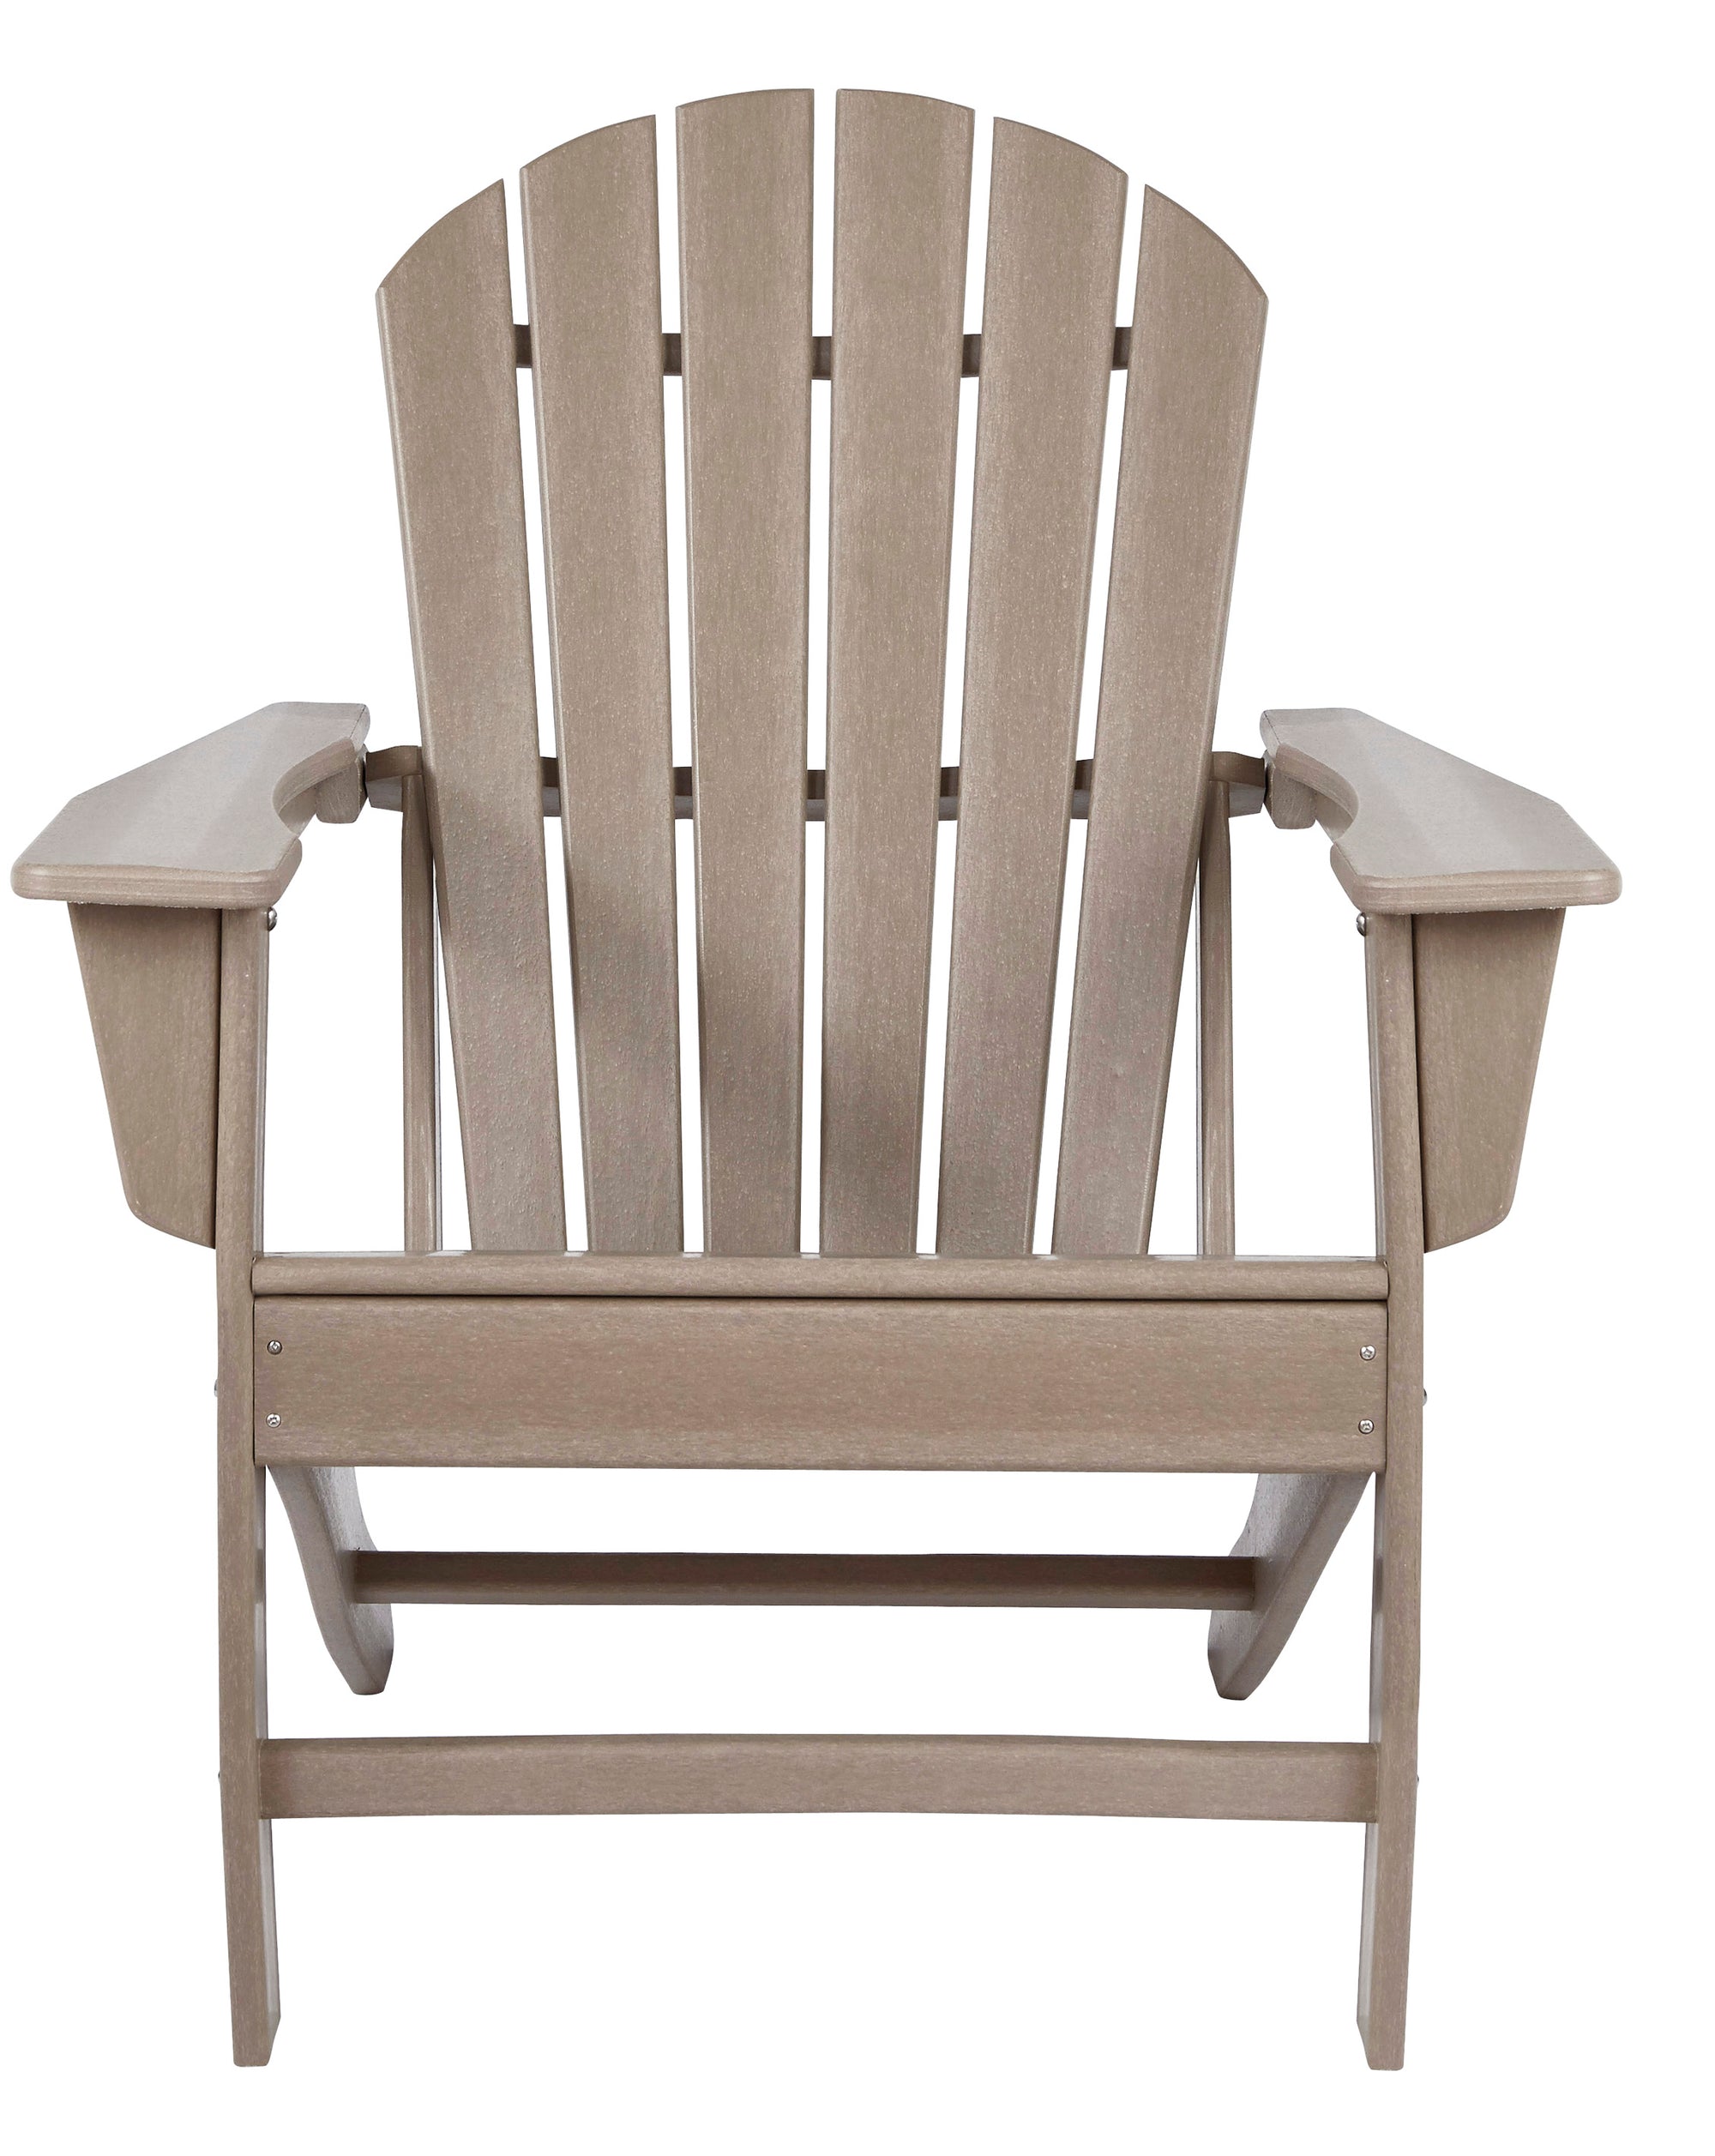 Sundown Treasure Beige Adirondack Chair - MJM Furniture